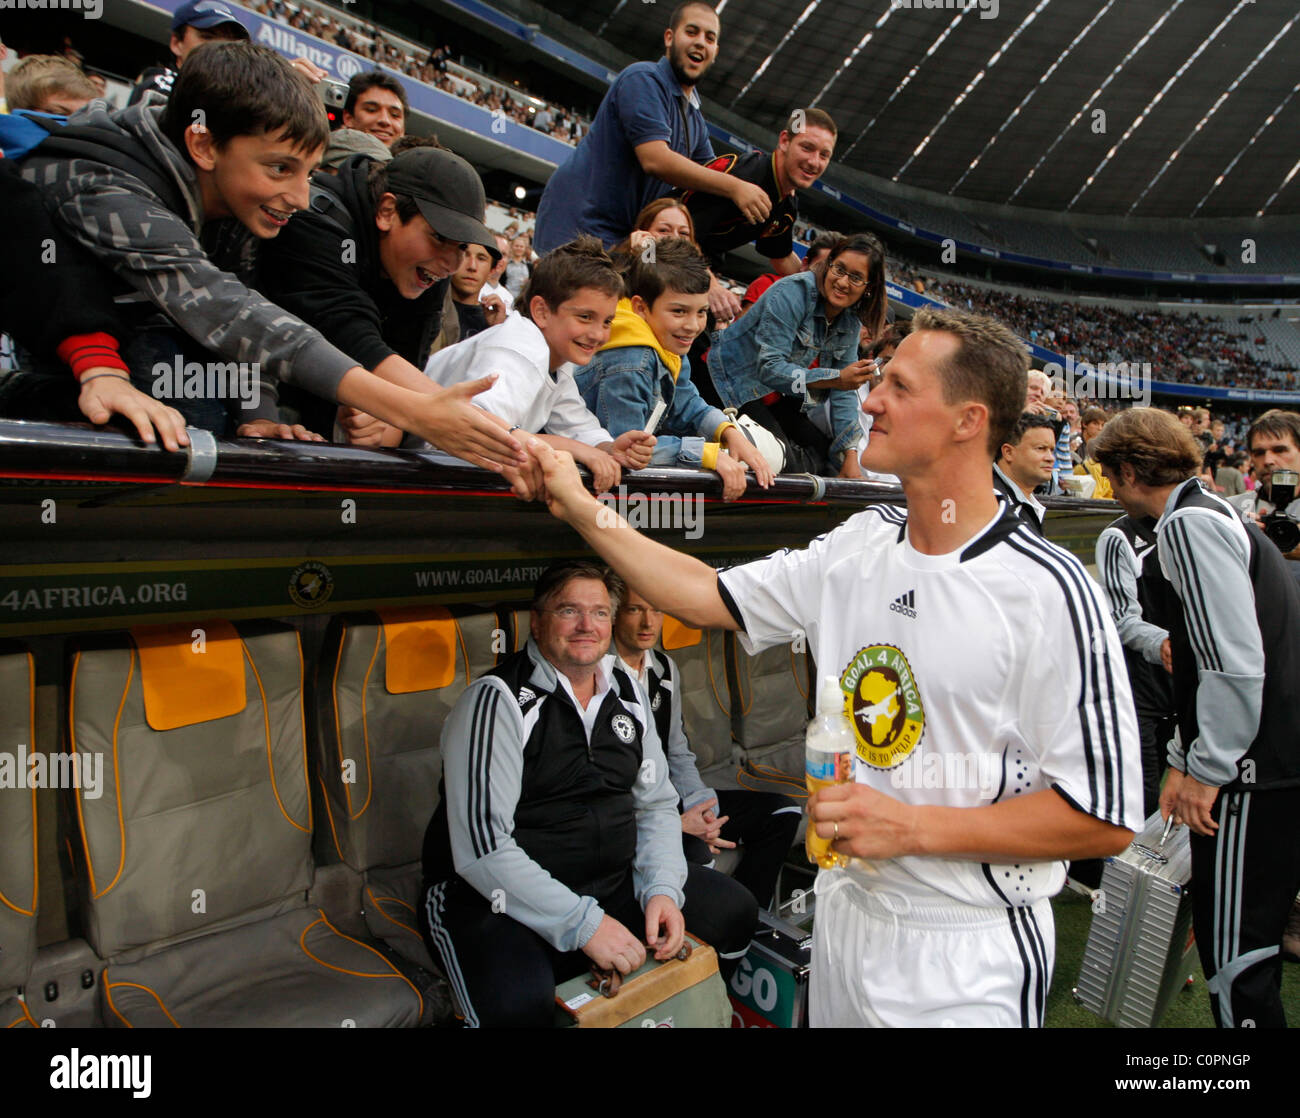 Michael Schumacher Goal4Africa charity football match at Allianz Arena  Munich, Germany - 12.07.08 Stock Photo - Alamy